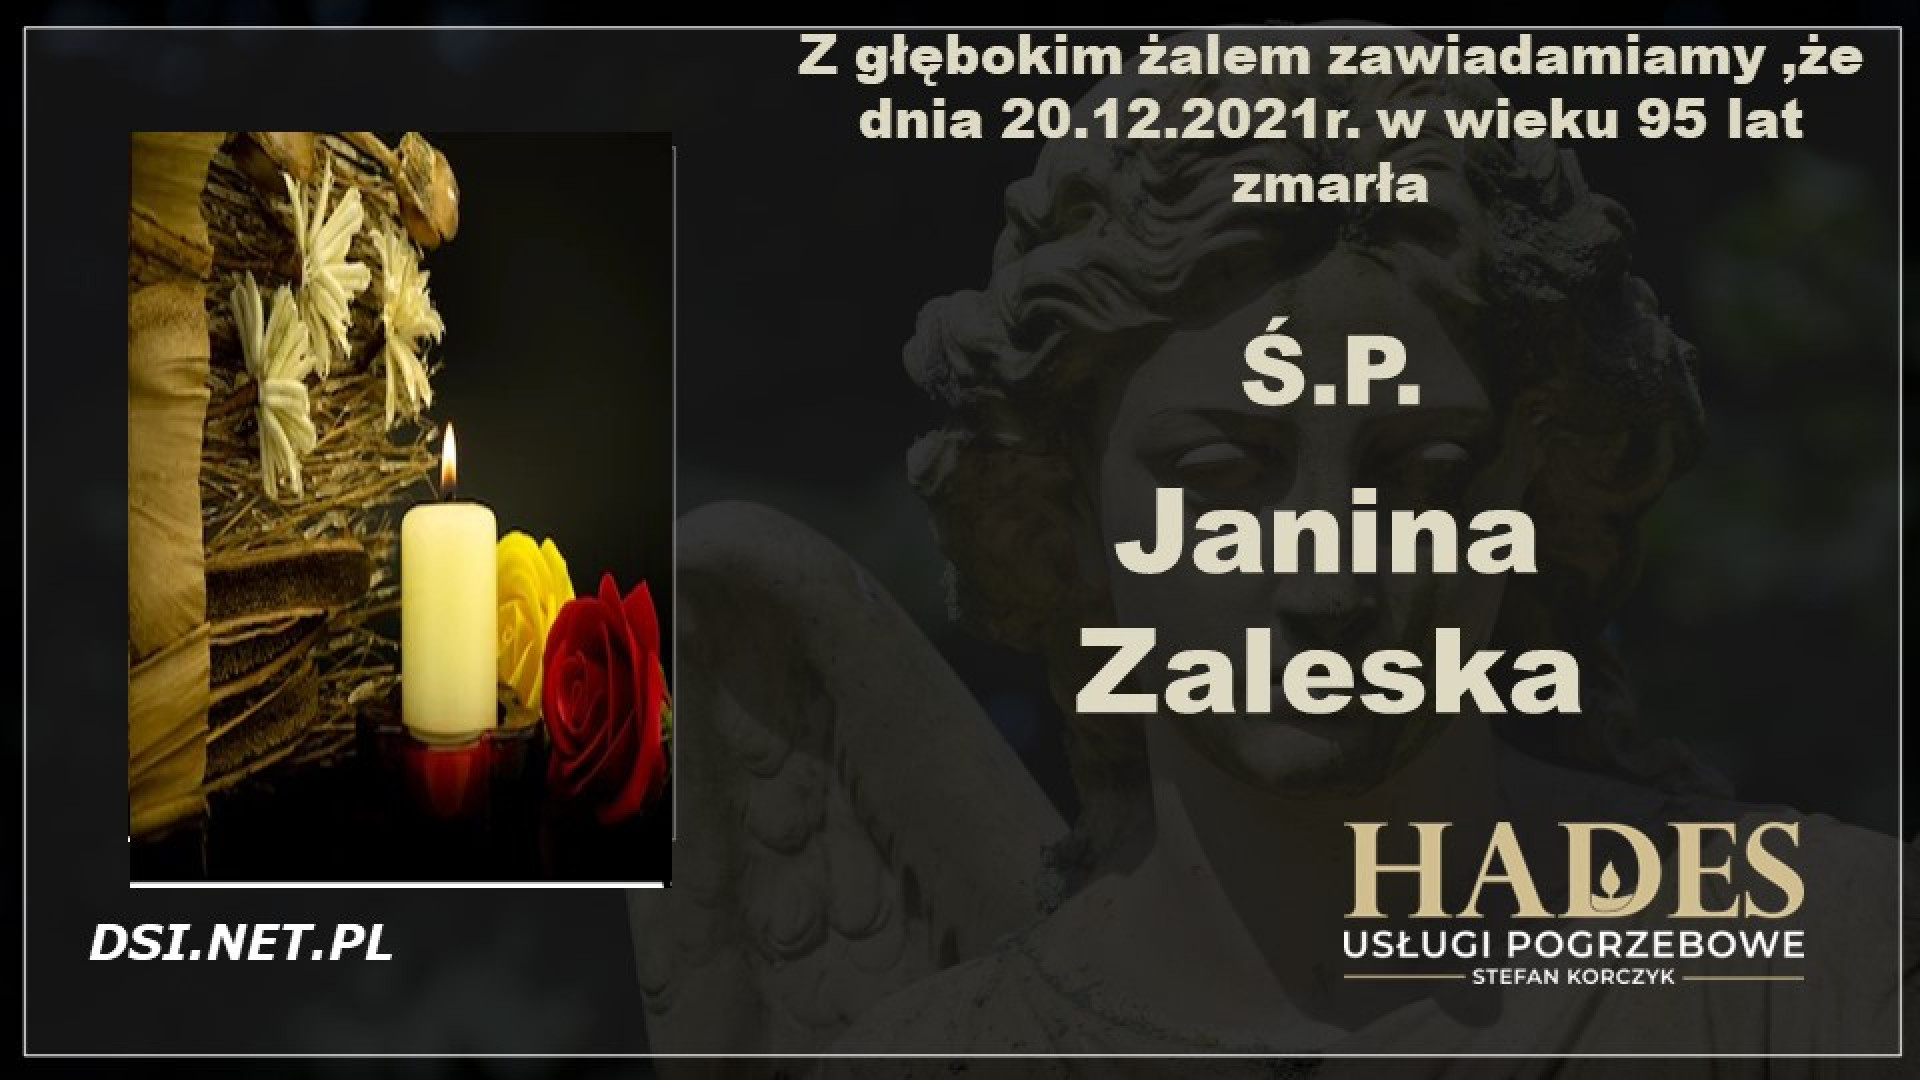 Ś.P. Janina Zaleska